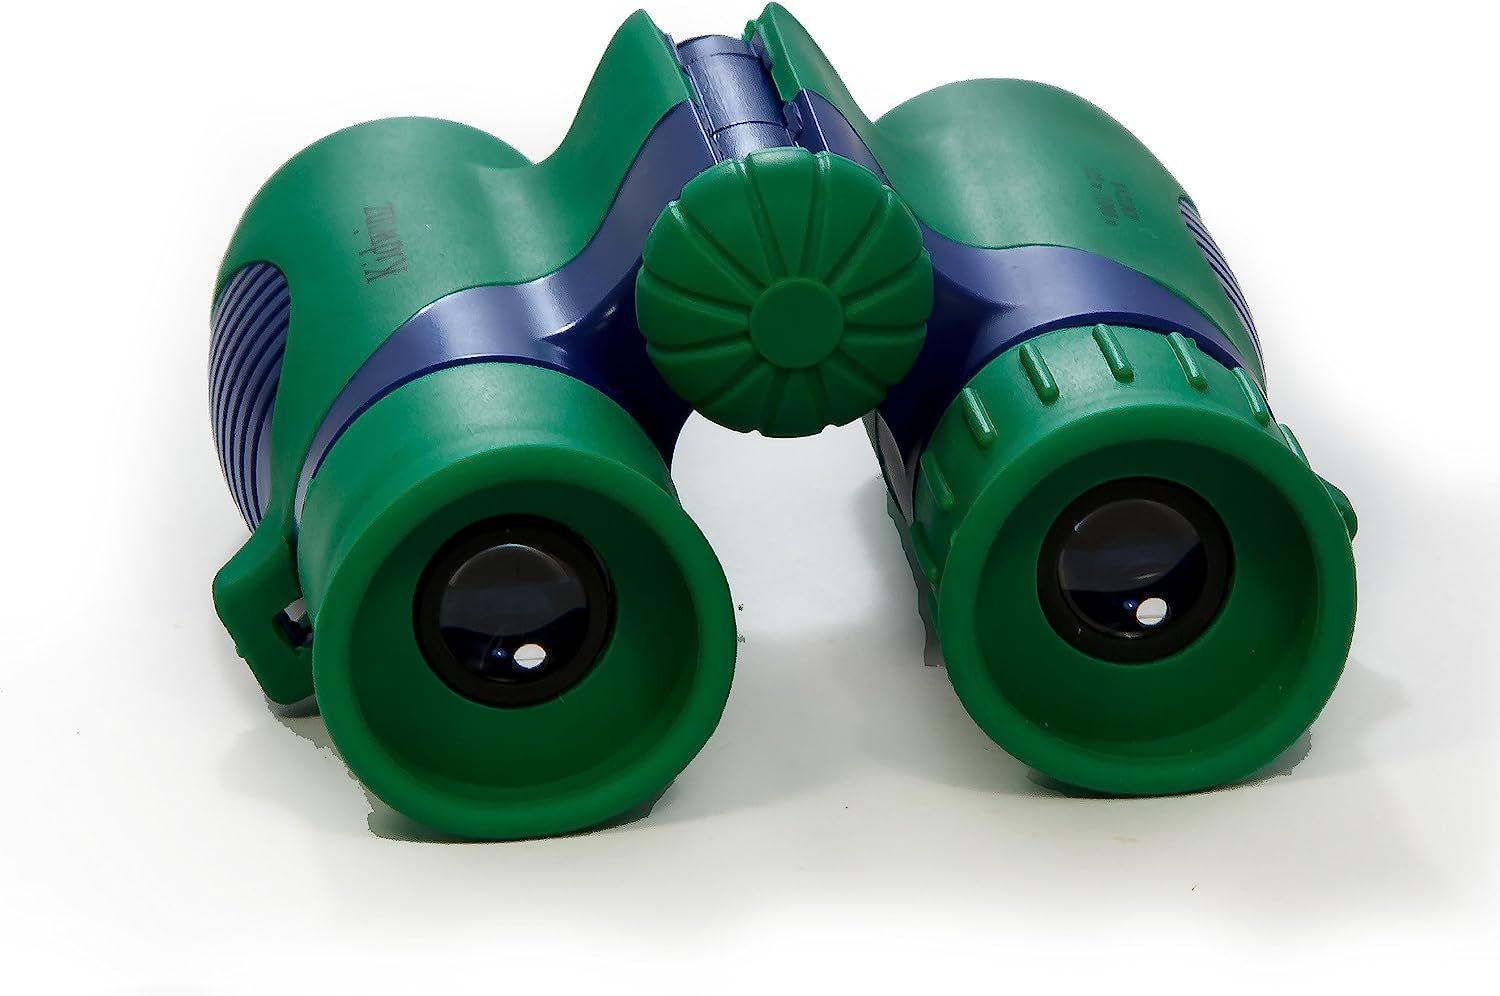 Kidwinz Original Compact 8x21 Kids Binoculars Set - High Resolution Real Optics - Shock Proof - B... | Amazon (US)